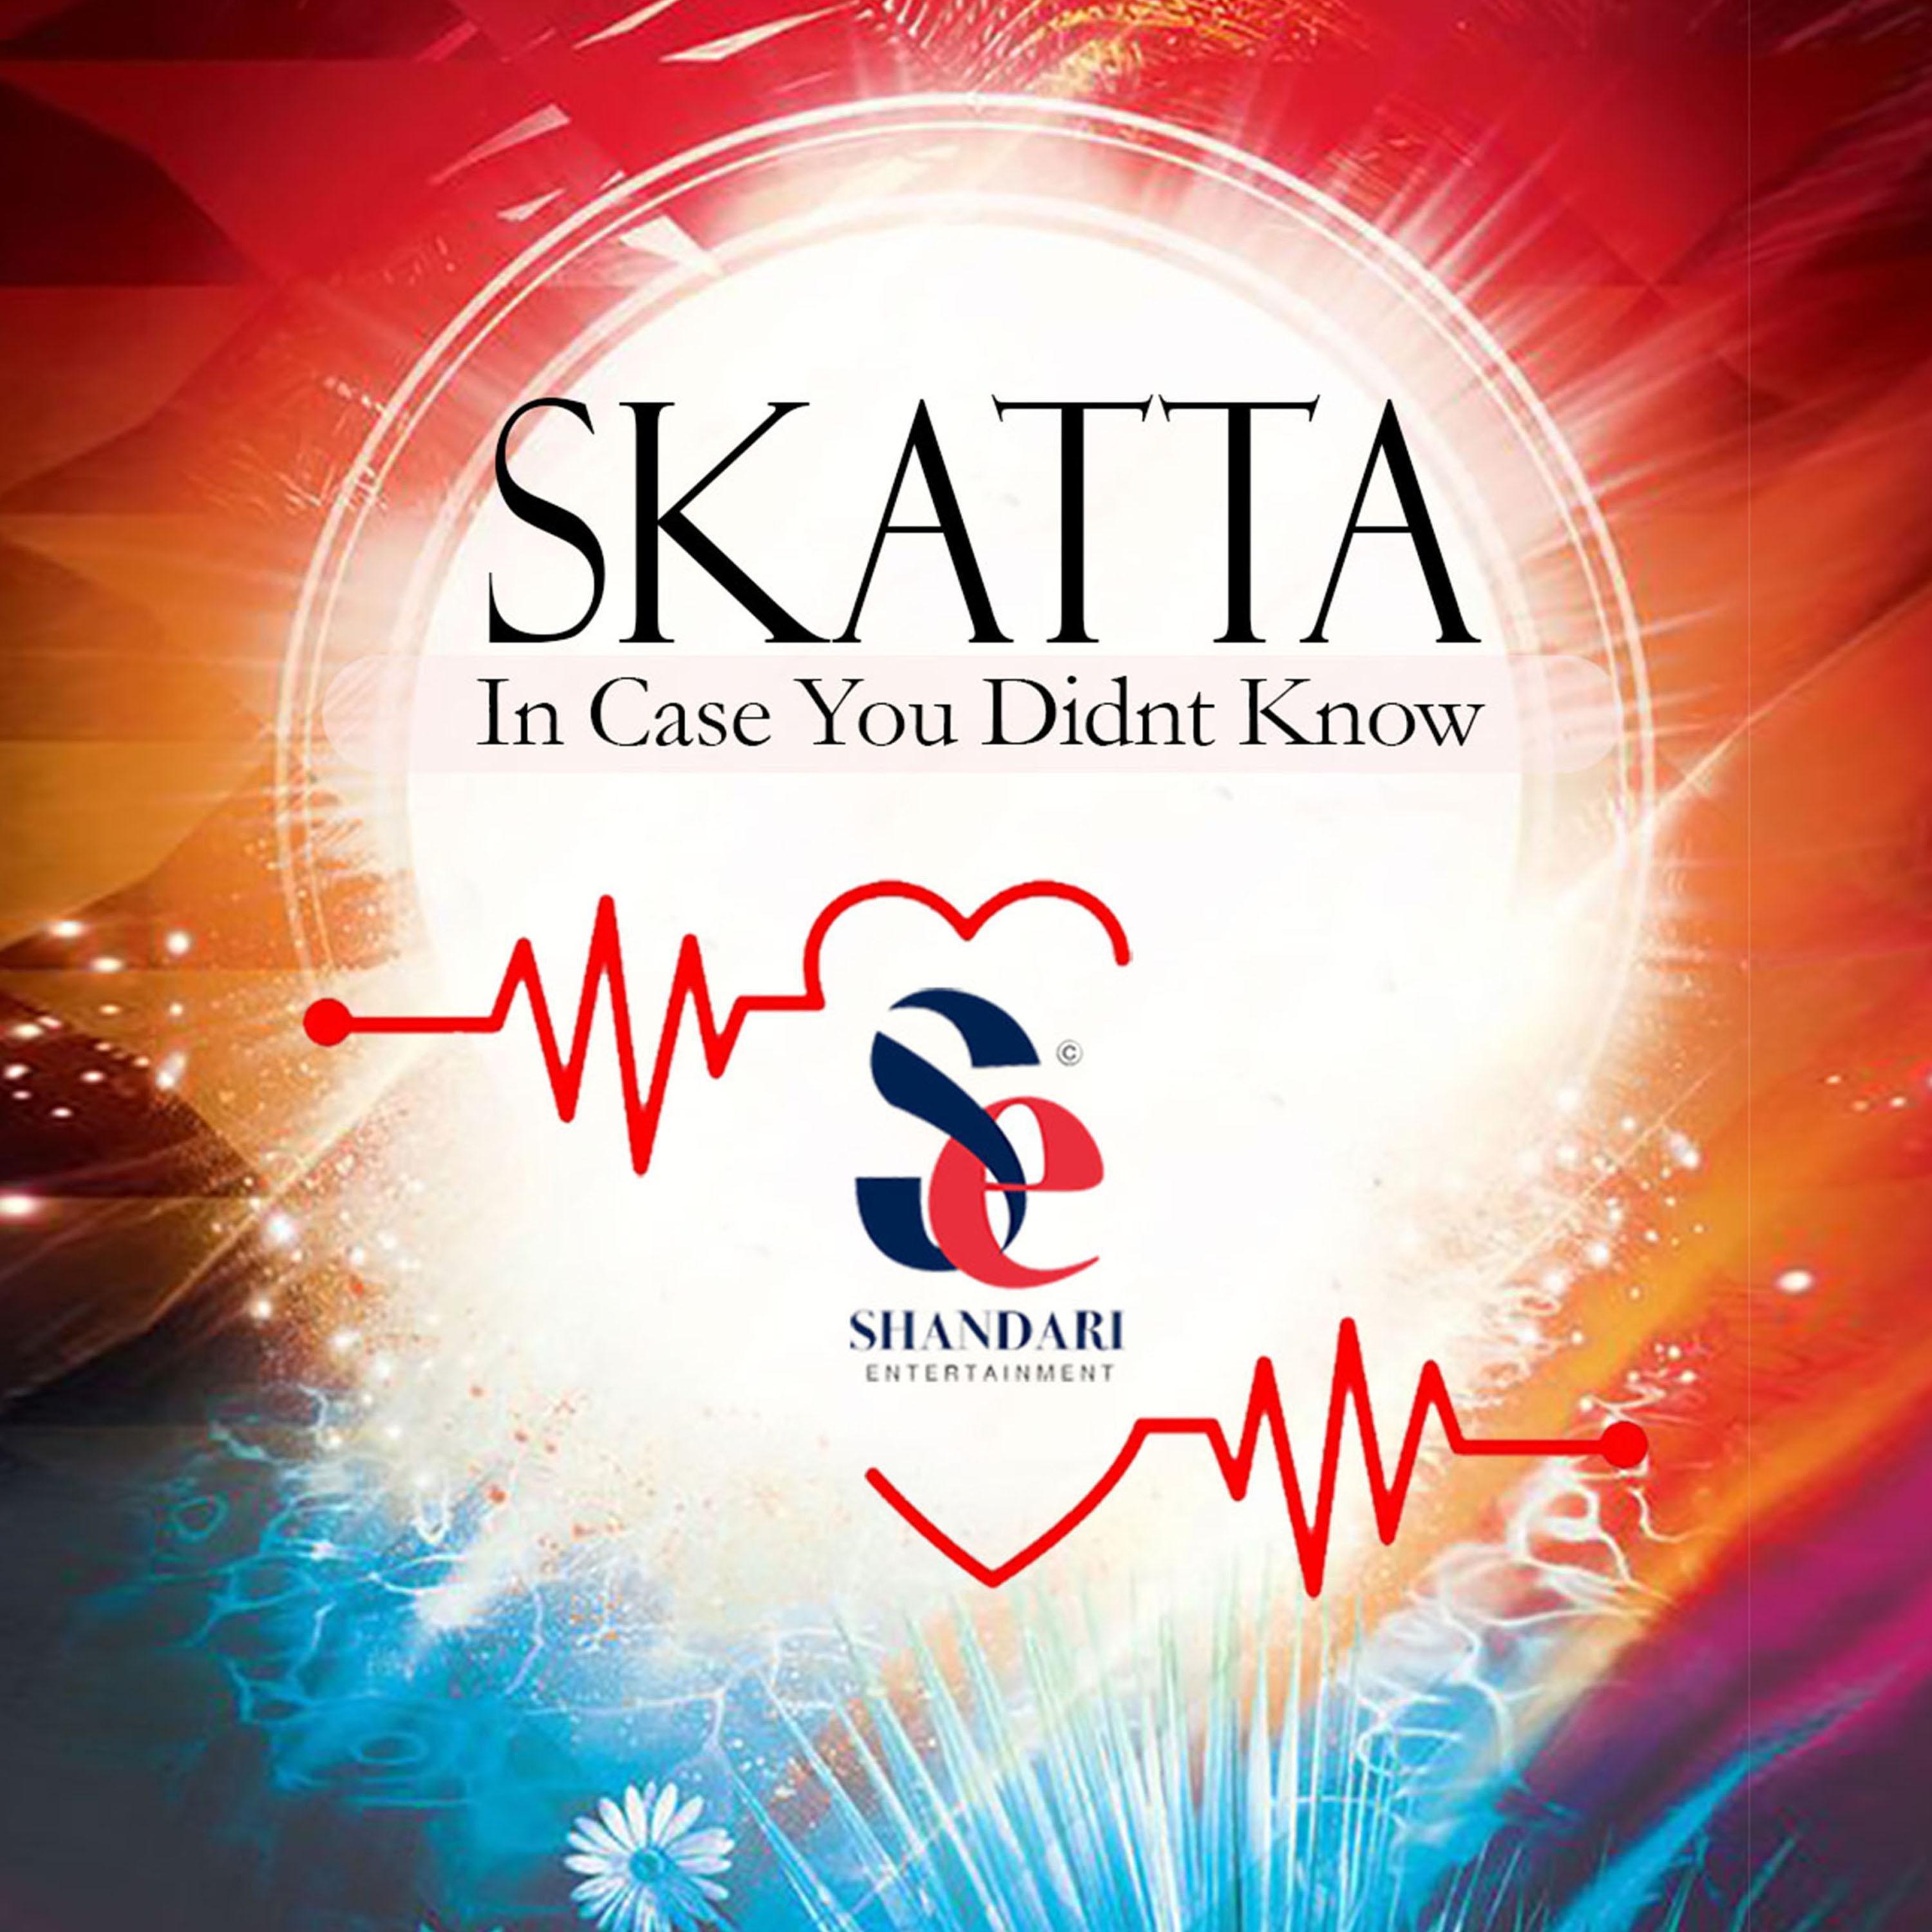 Skatta - In Case You Didn't Know